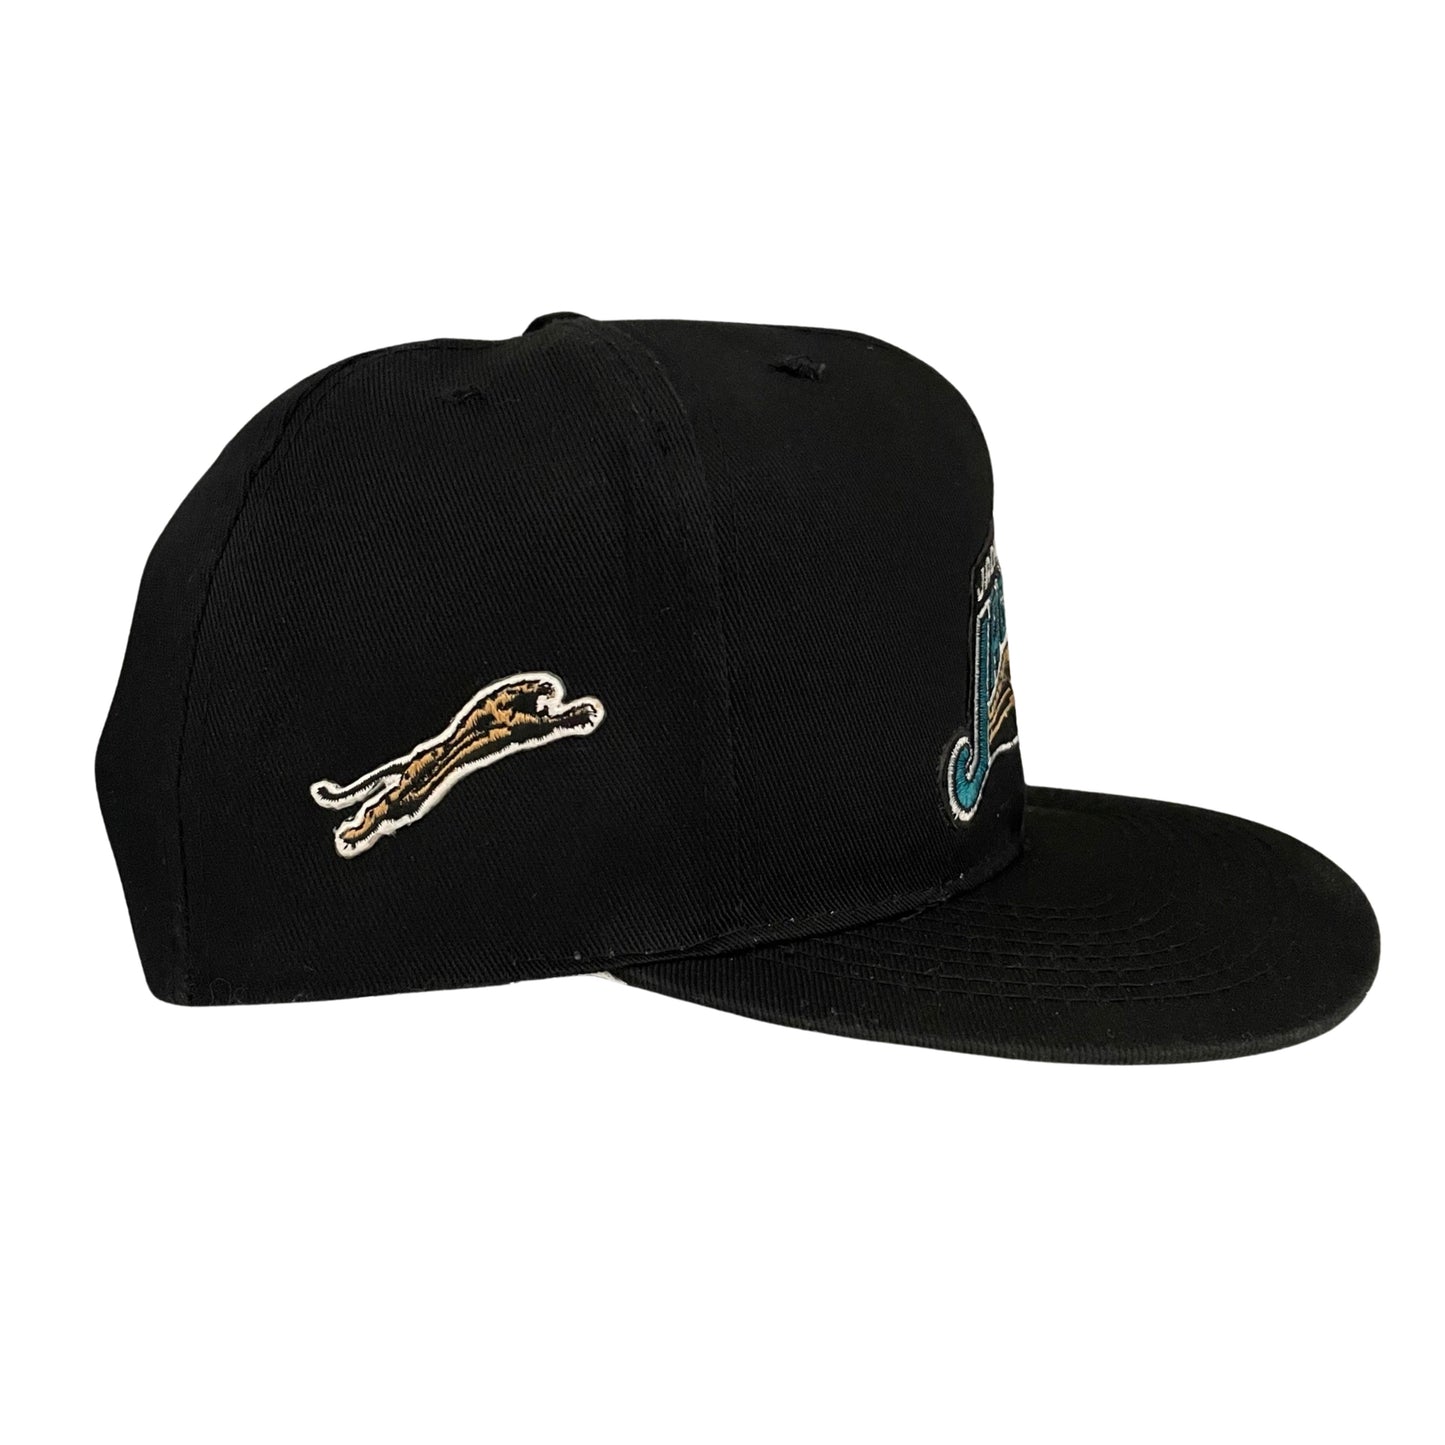 Vintage Jacksonville Jaguars AMERICAN NEEDLE banned logo hat